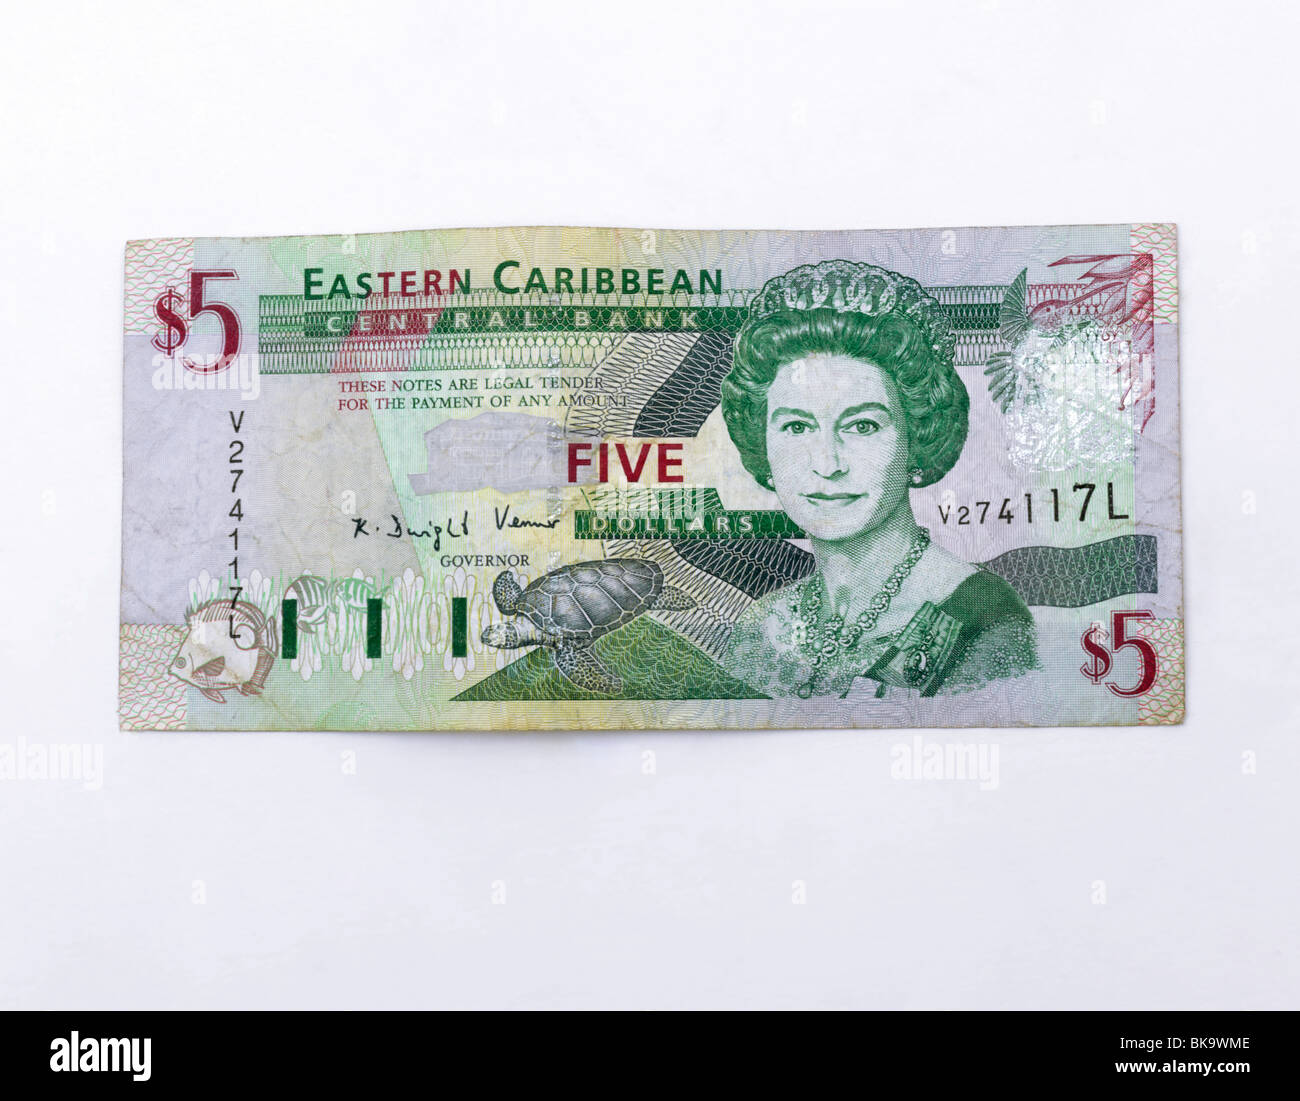 Eastern Caribbean Banknote 5 Dollars Stock Photo